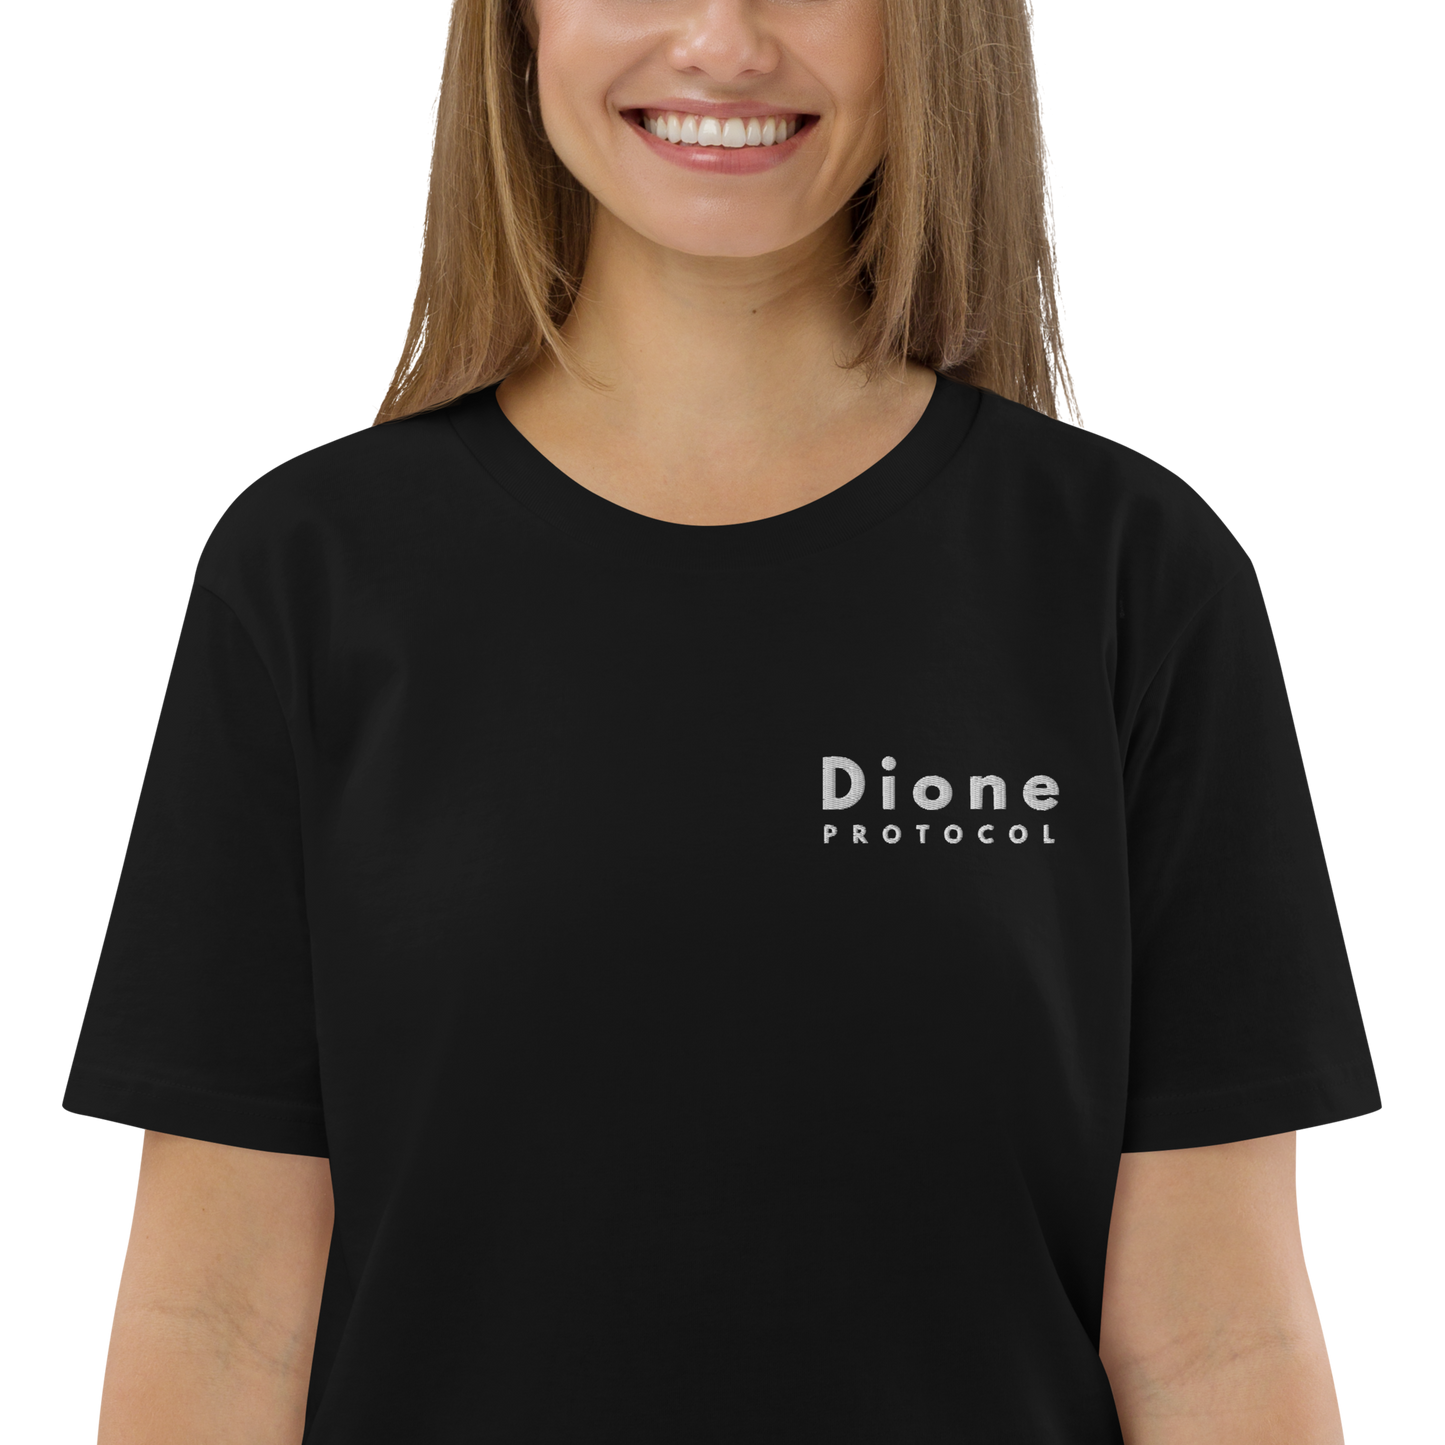 T-Shirt - Dione V1.0 - Black, Navy, Grey - Premium